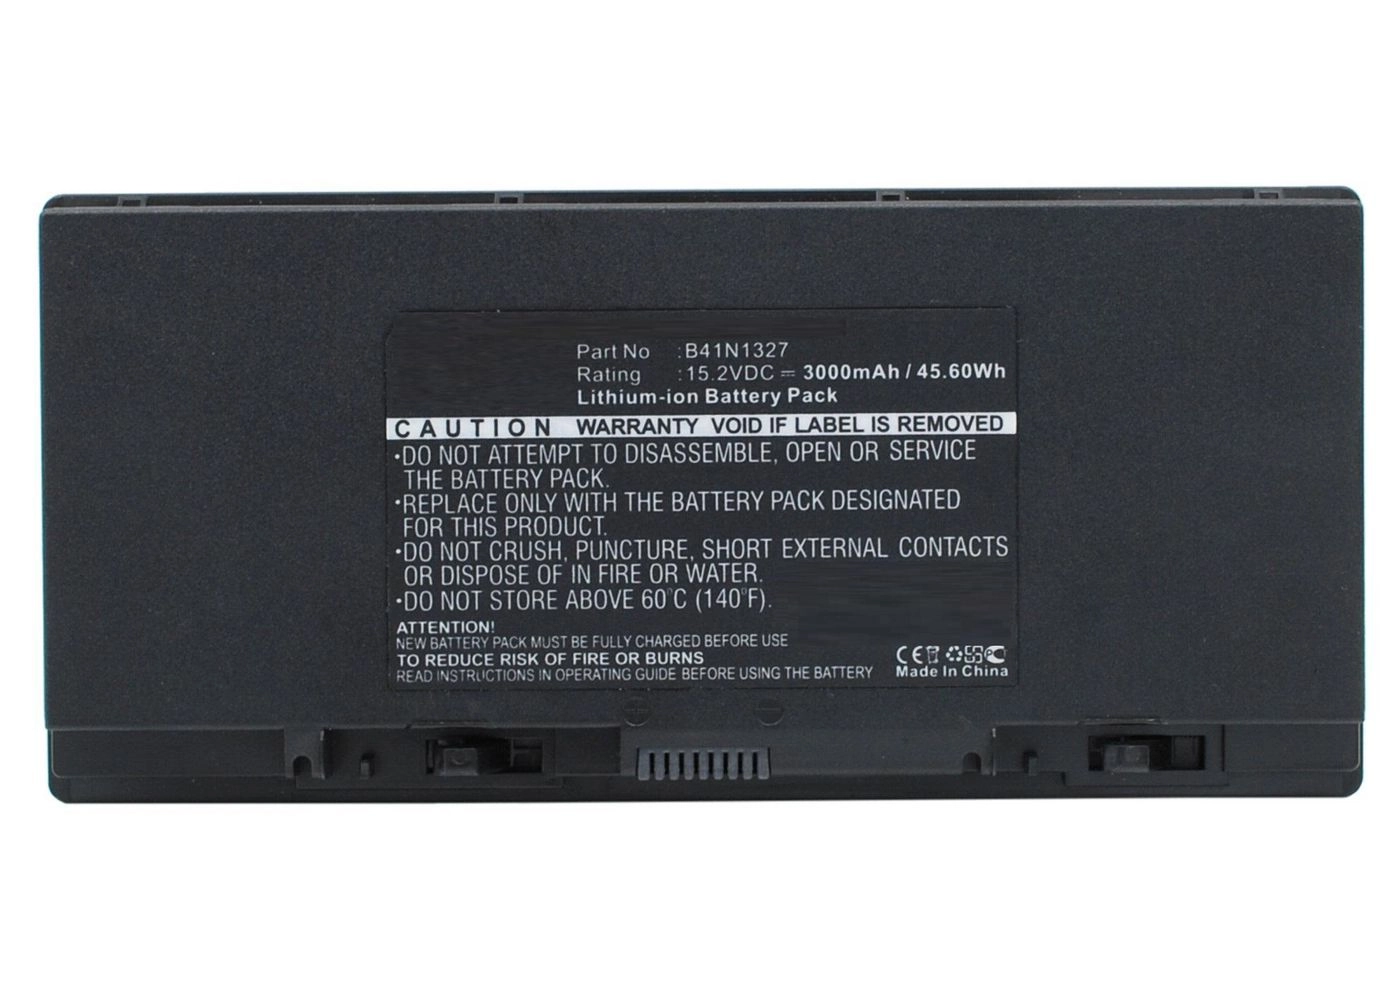 CoreParts Laptop Battery for Asus 34Wh Li-ion 15.2V 2200mAh, B551LA-CN018G, B551LA-CR026G, Pro B551, Pro B551LA-CR015G, Pro B551LG